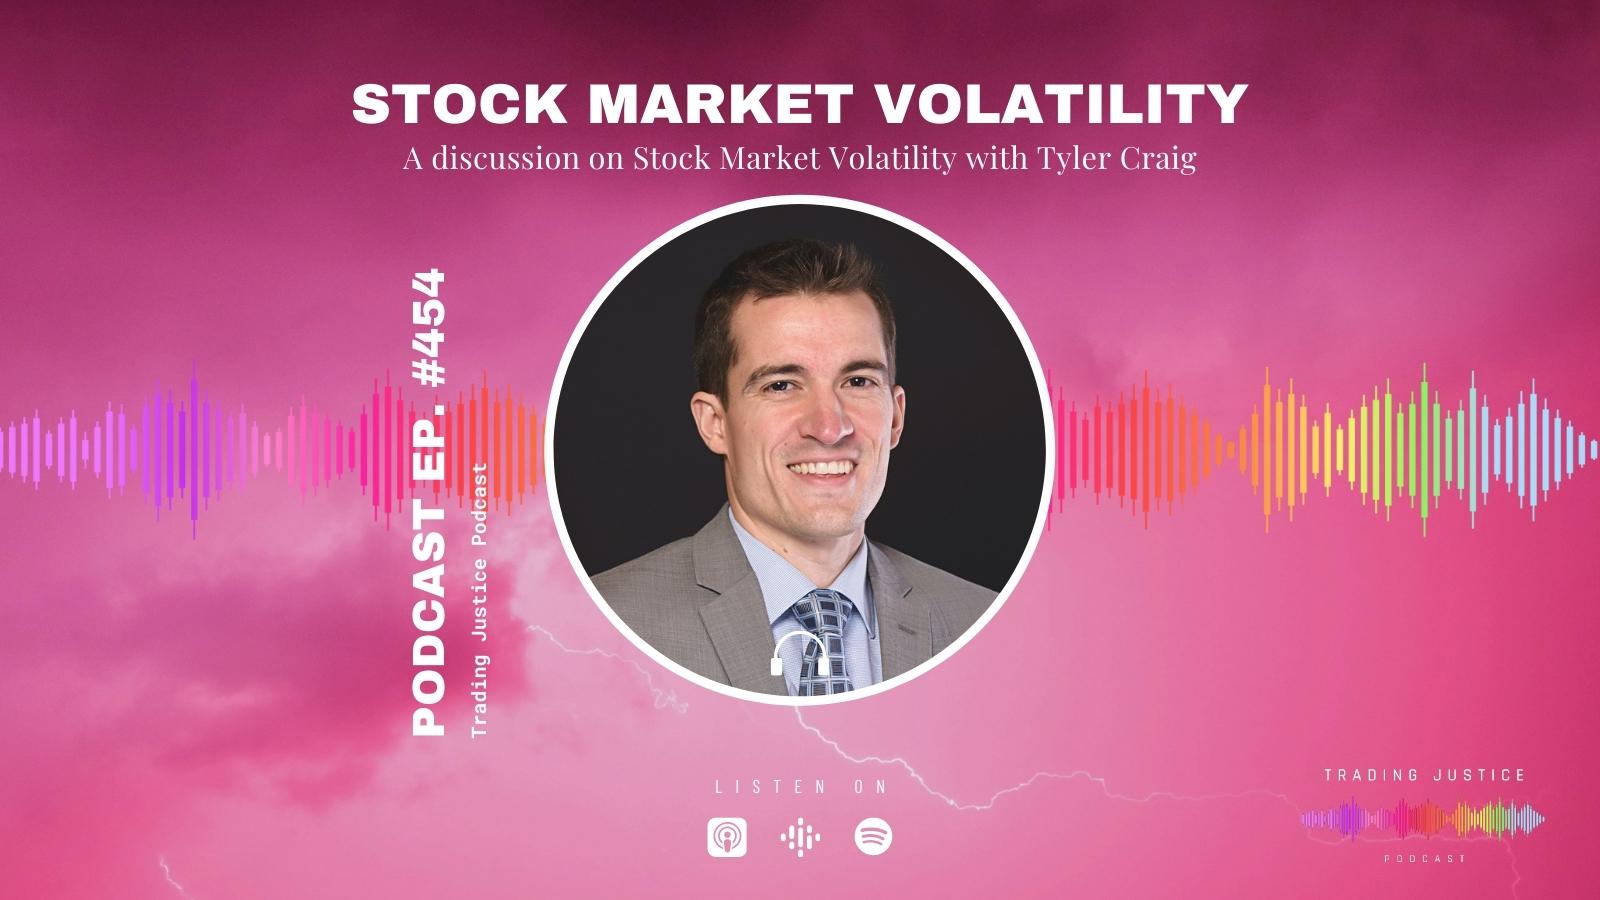 Trading Justice 454: Tyler Craig on Stock Market Volatility